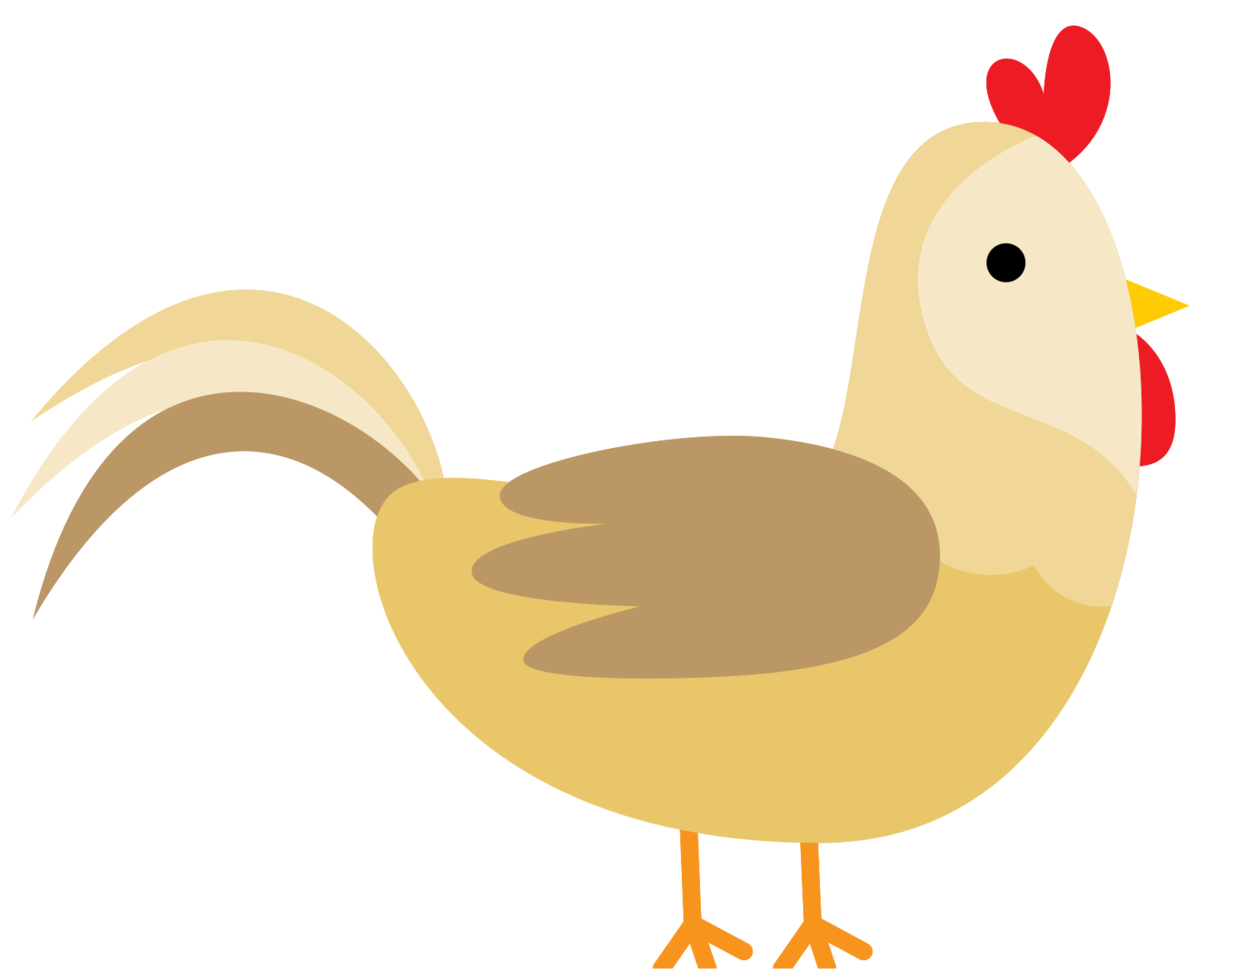 Download PNG image - Chicken Bird Transparent Images PNG 